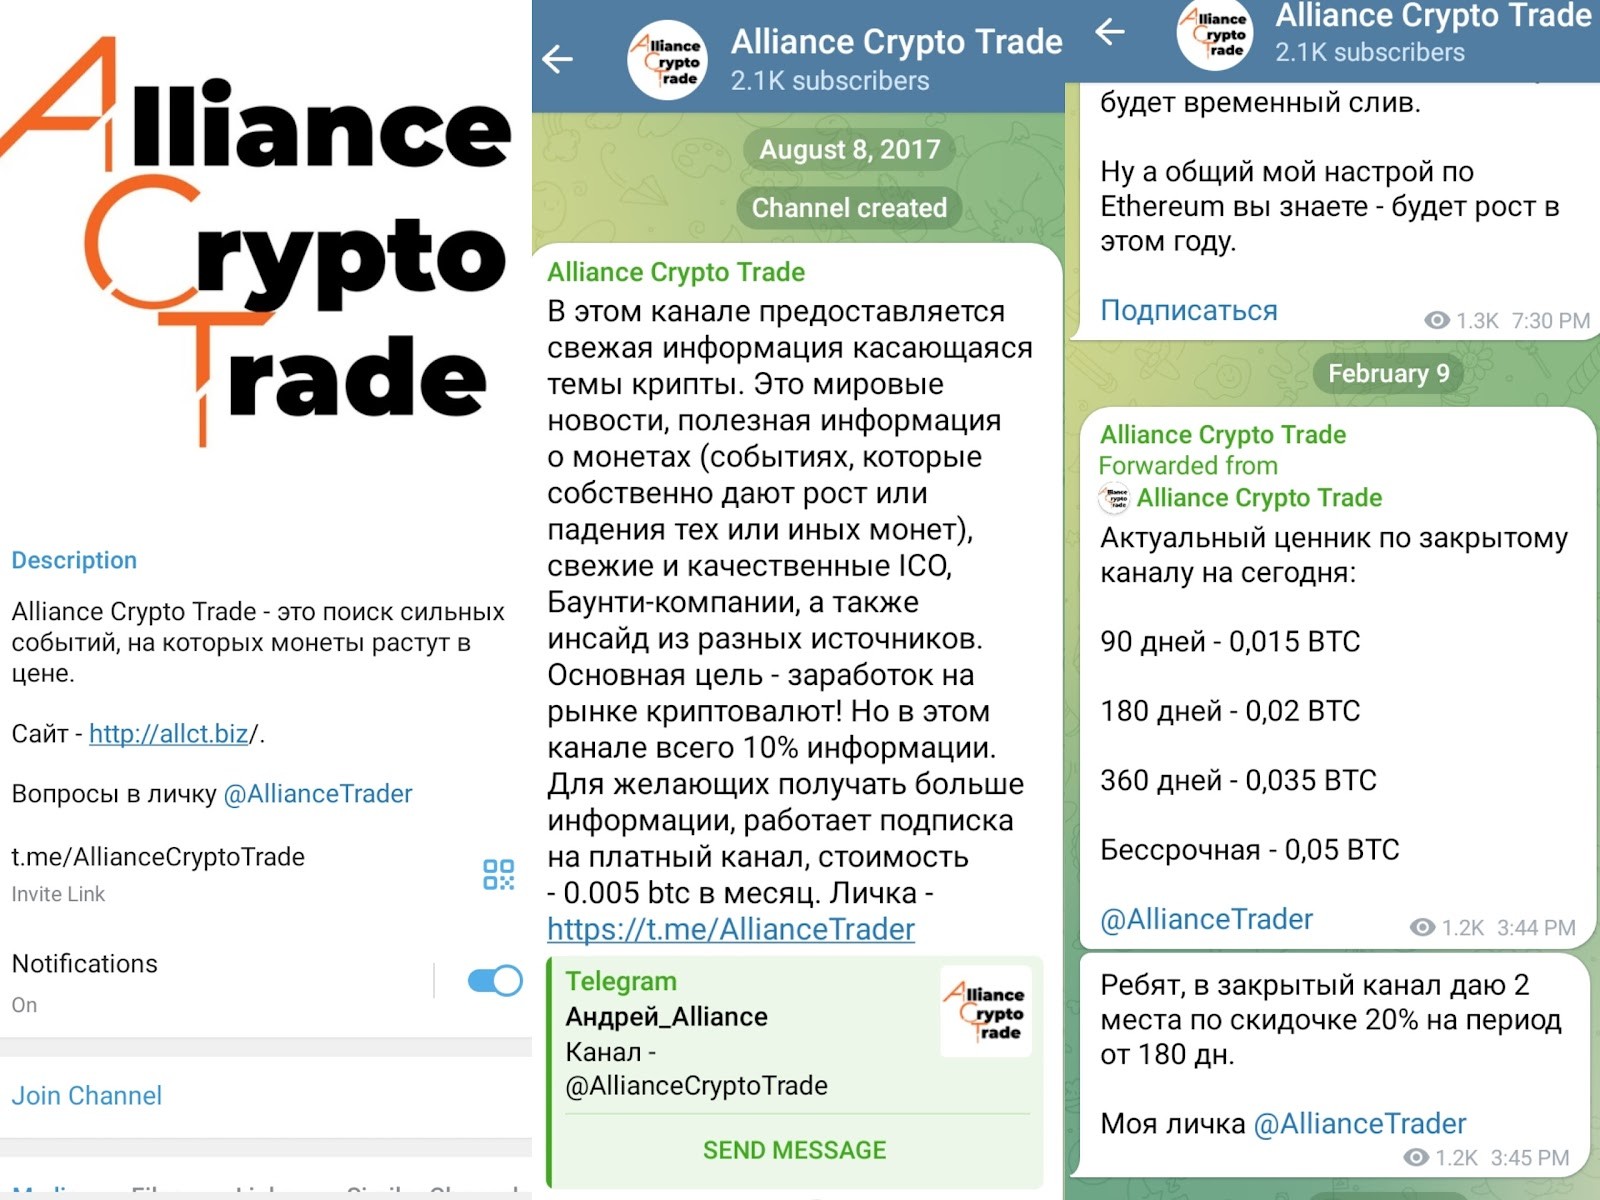 Alliance Crypto Trade